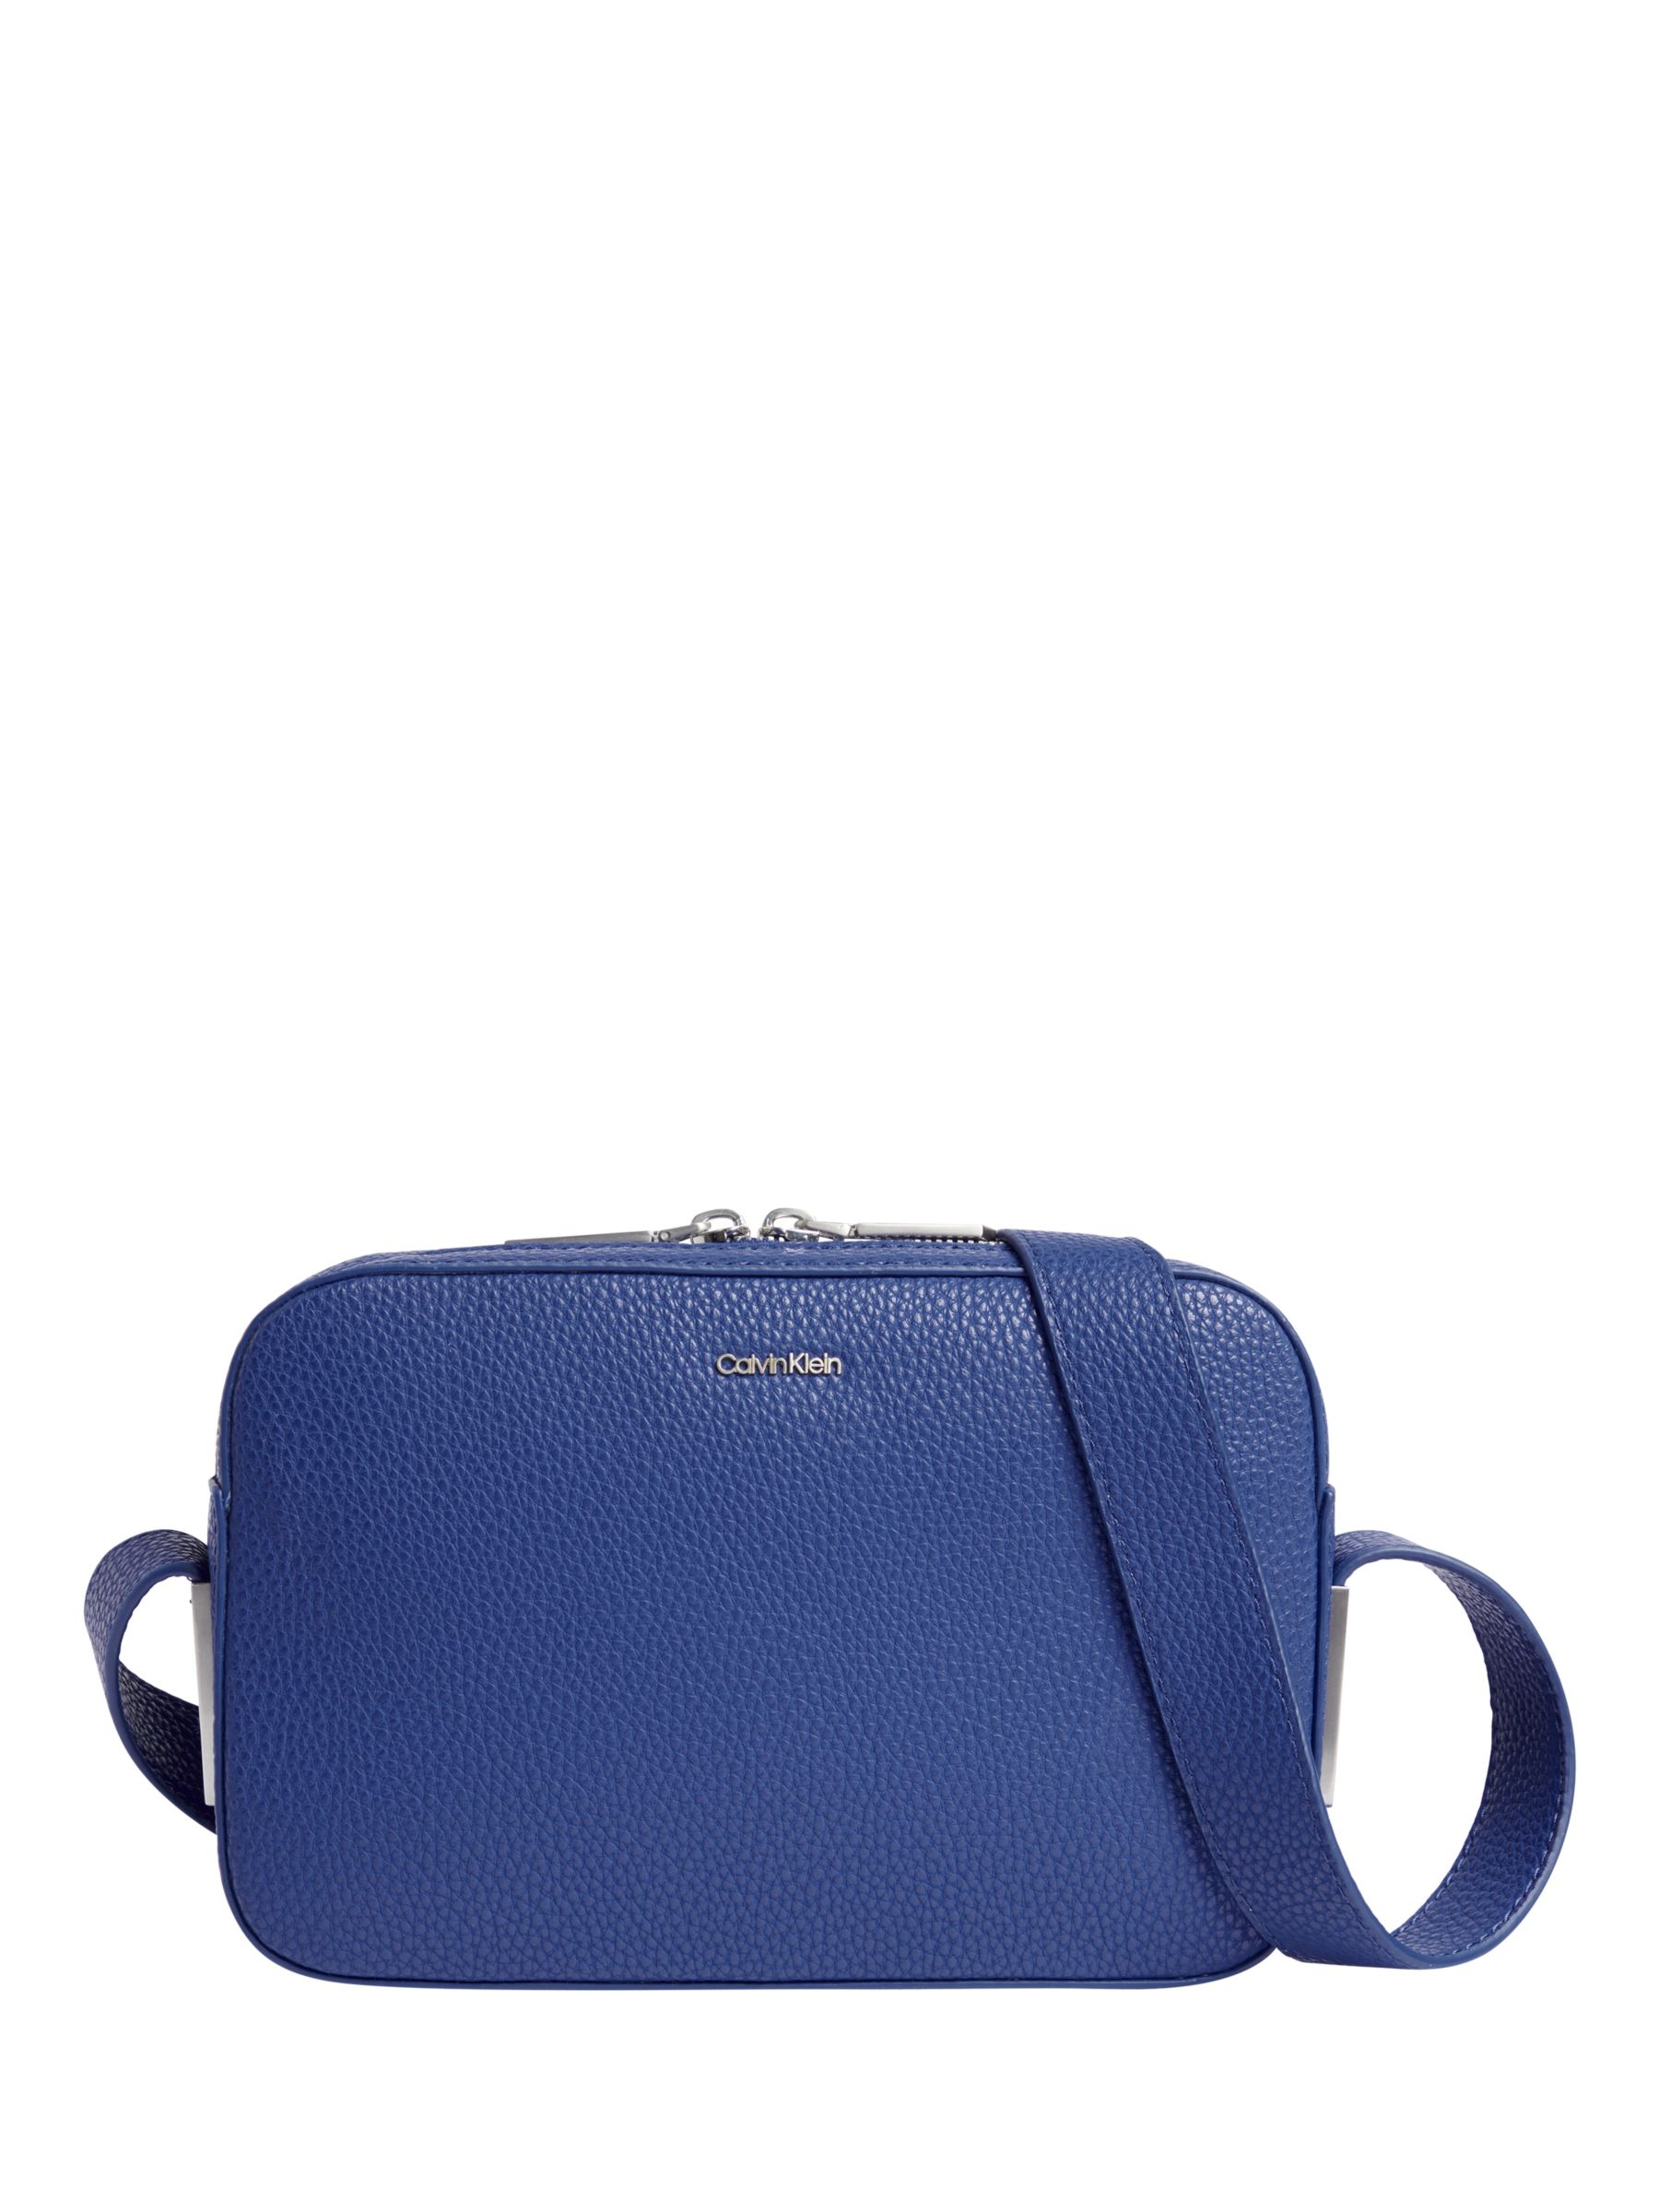 Calvin Klein Cross Body Bag, Ultra Blue at John Lewis & Partners